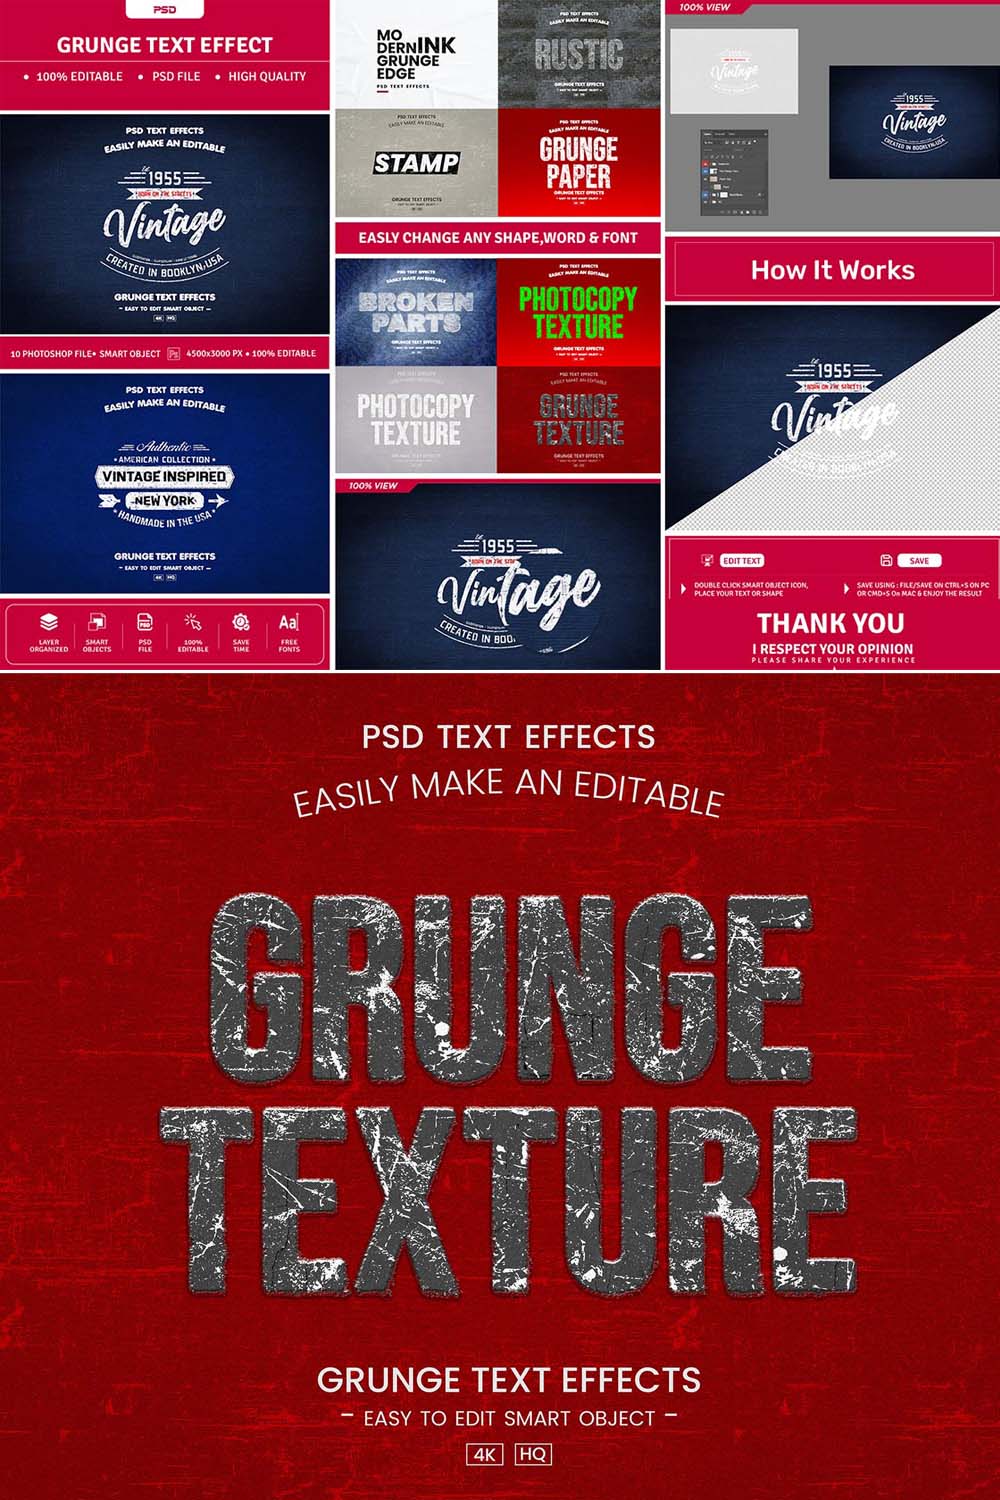 Grunge 3d Editable Text Effect pinterest preview image.